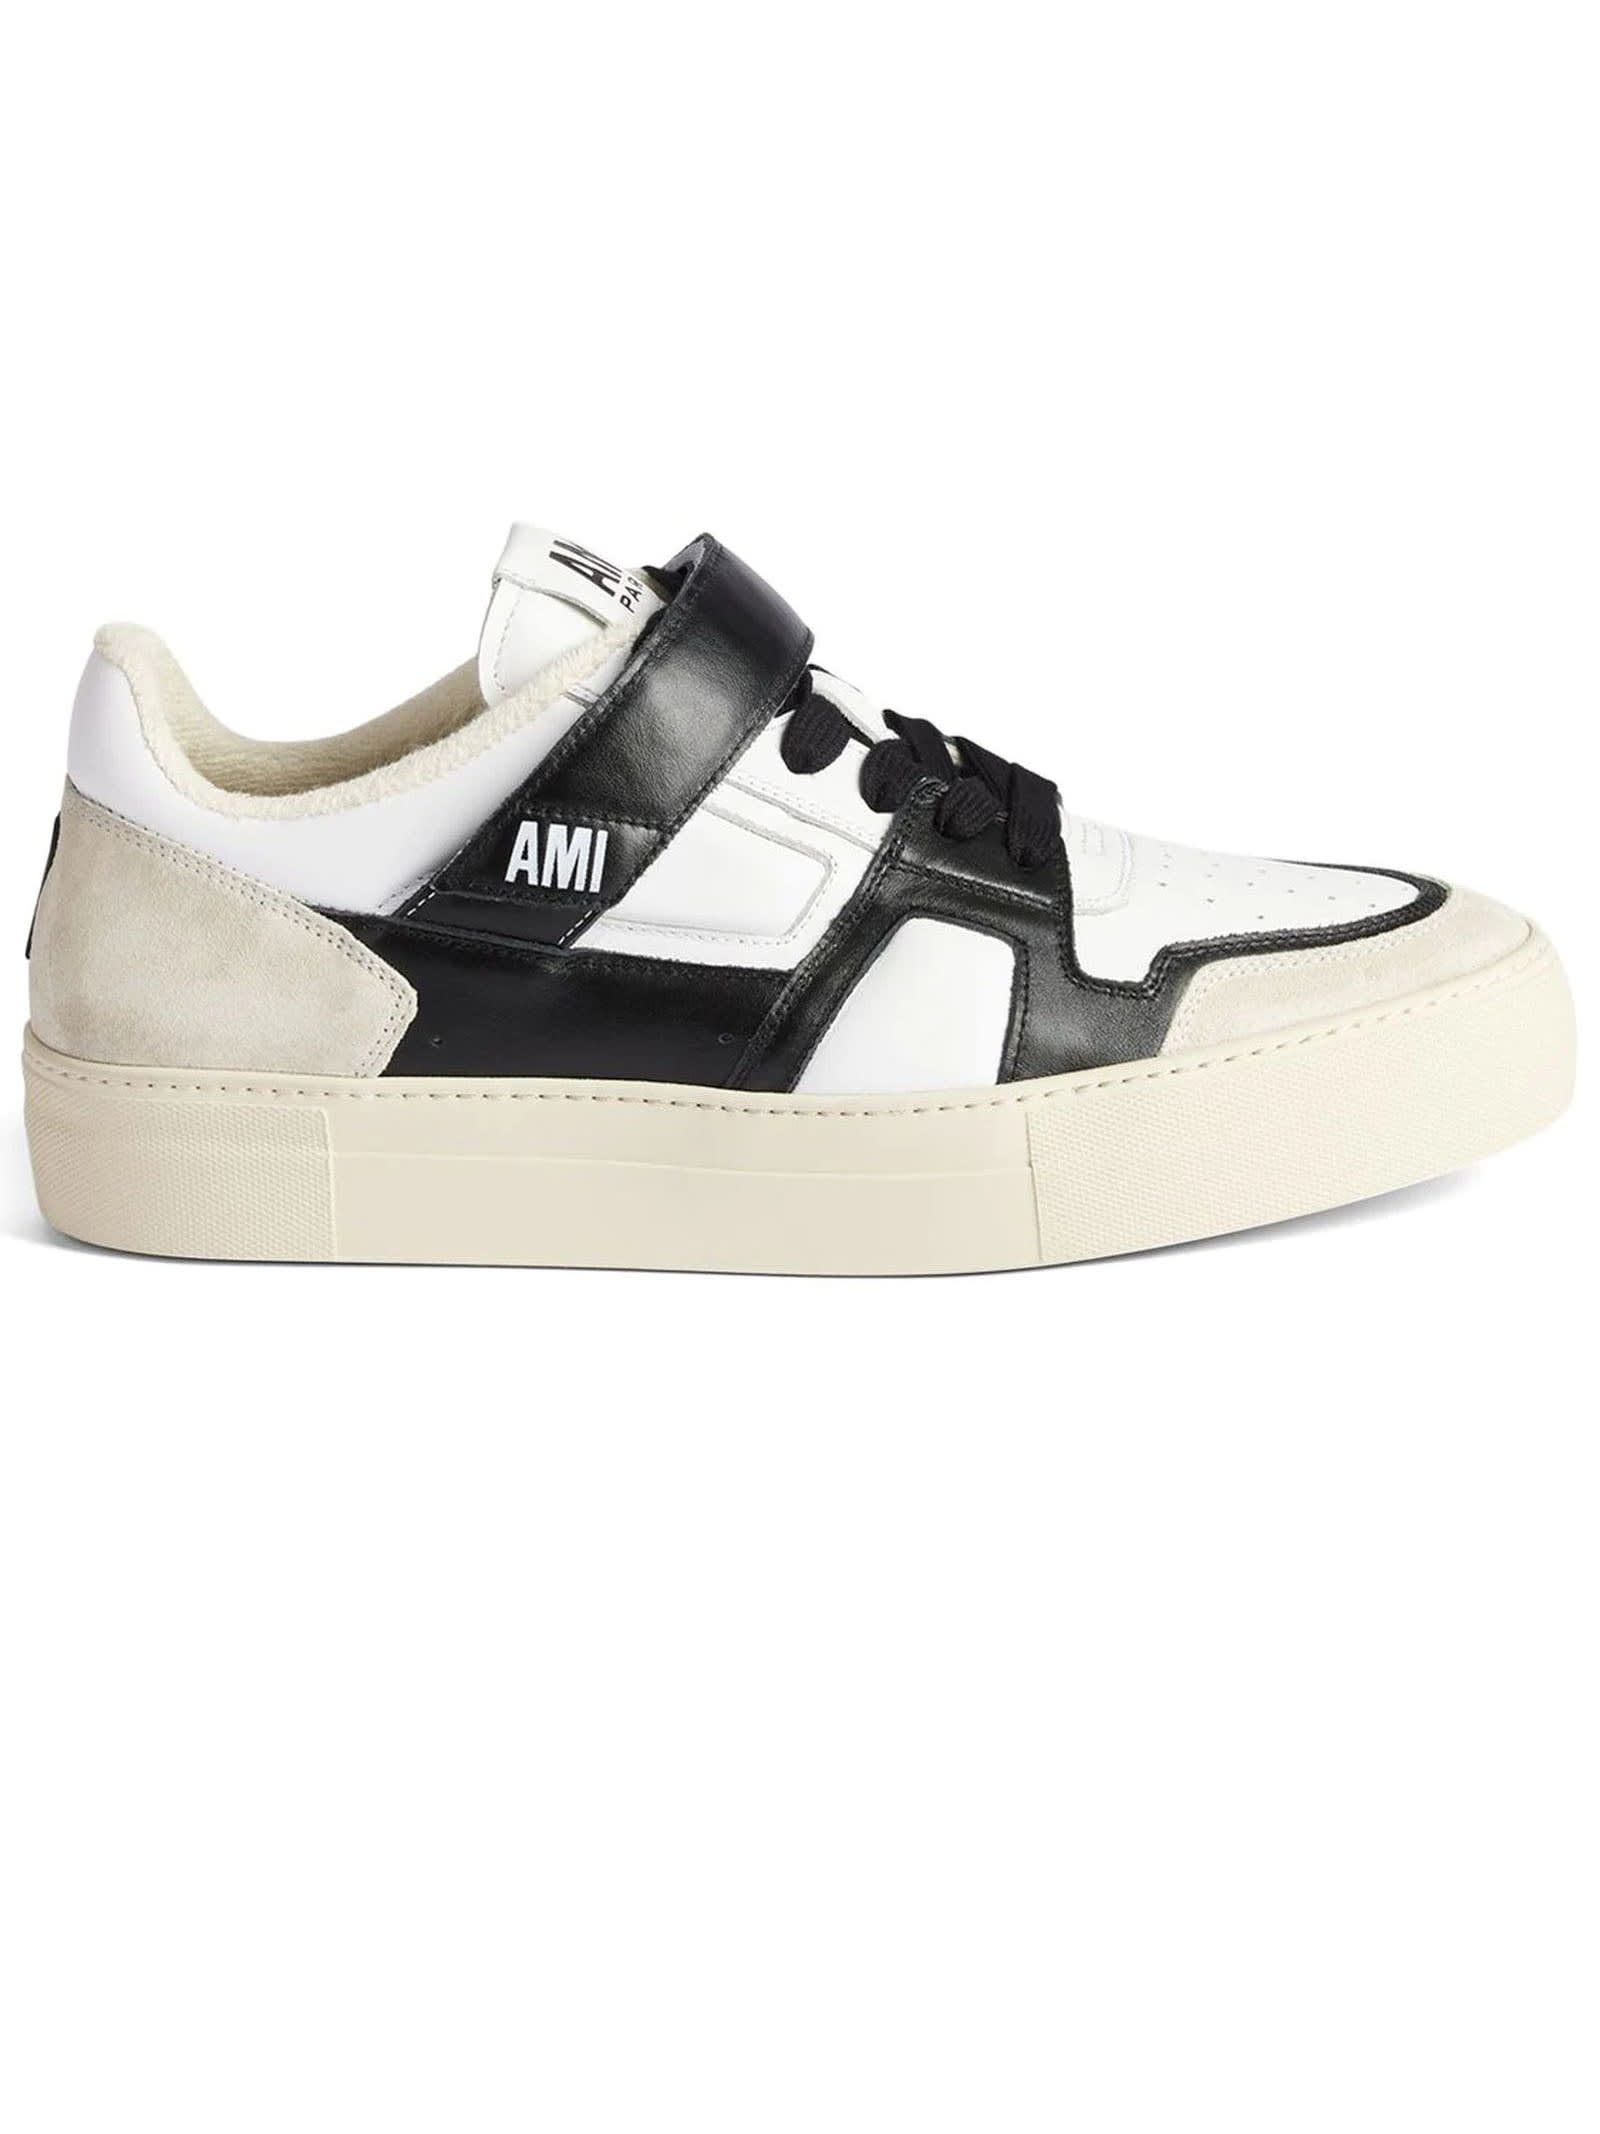 Ami Alexandre Mattiussi White And Black Leather Sneakers